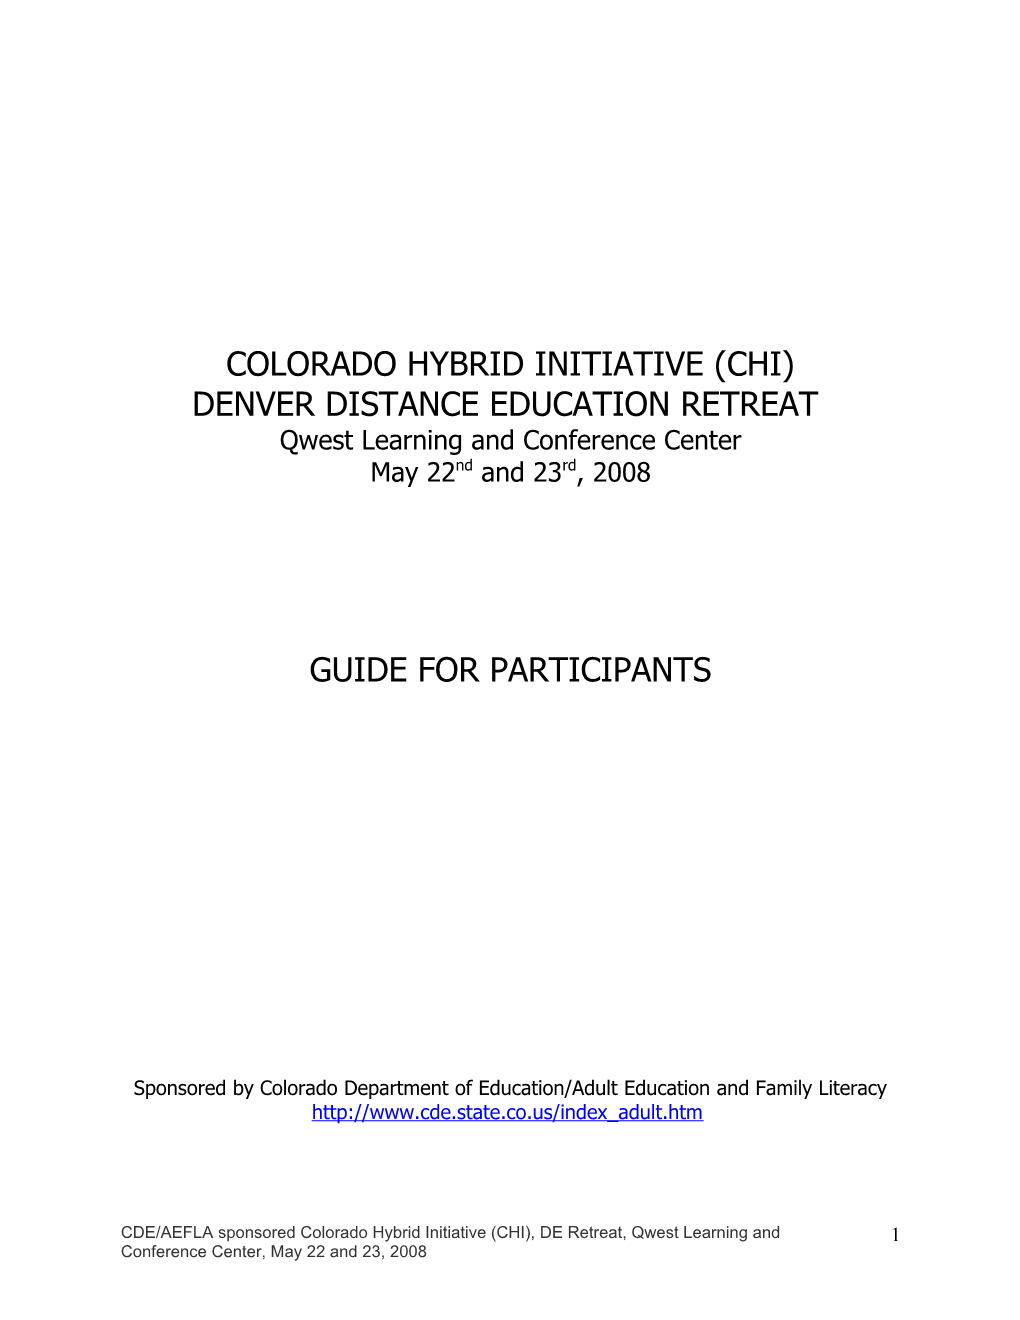 Colorado Hybrid Initiative (Chi)